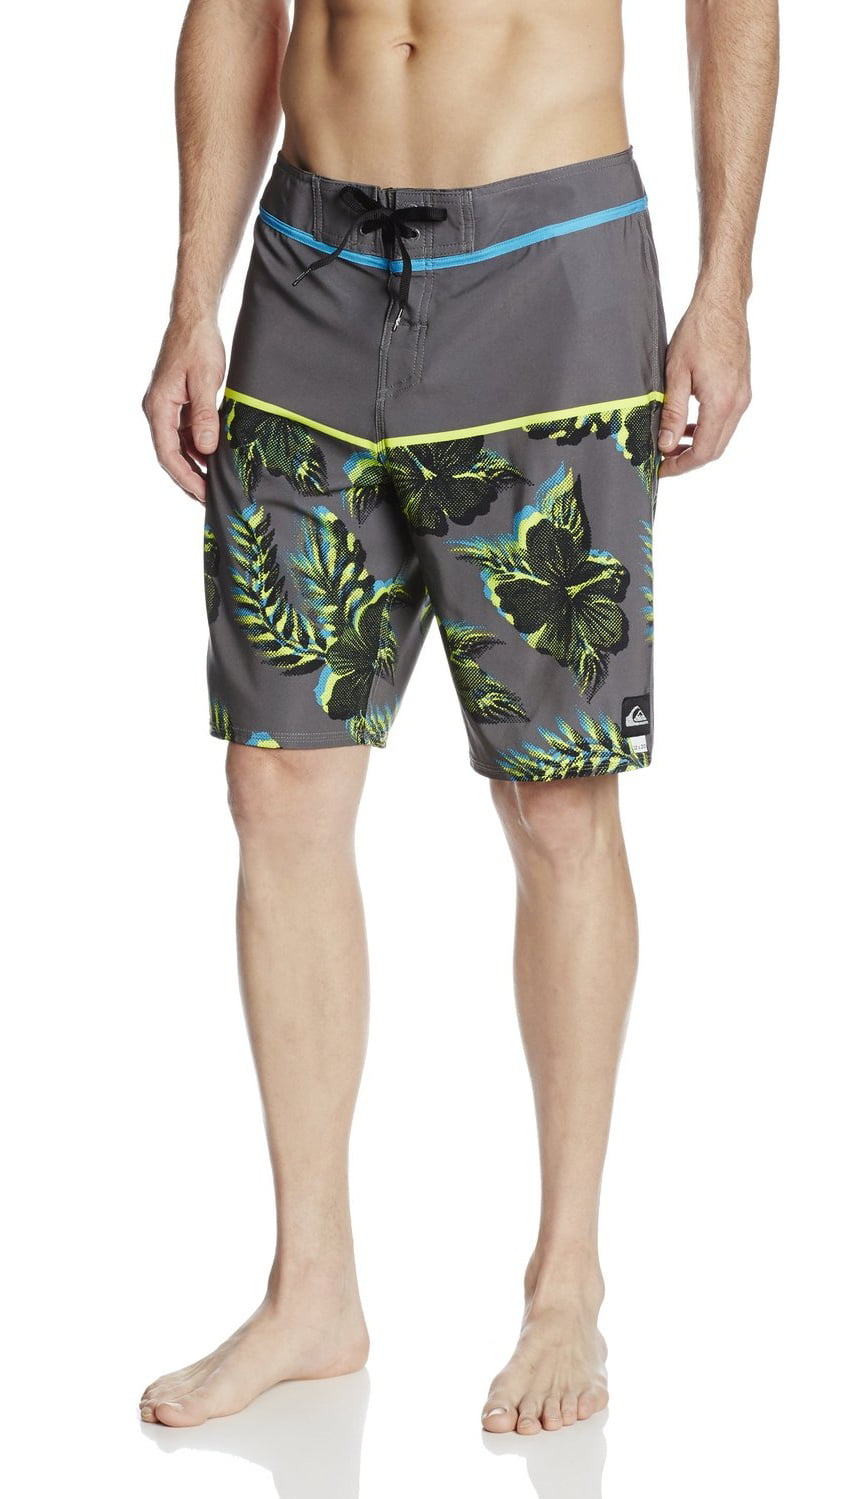 quiksilver board shorts men's tropical color kpc6 grey print 20 inches long 